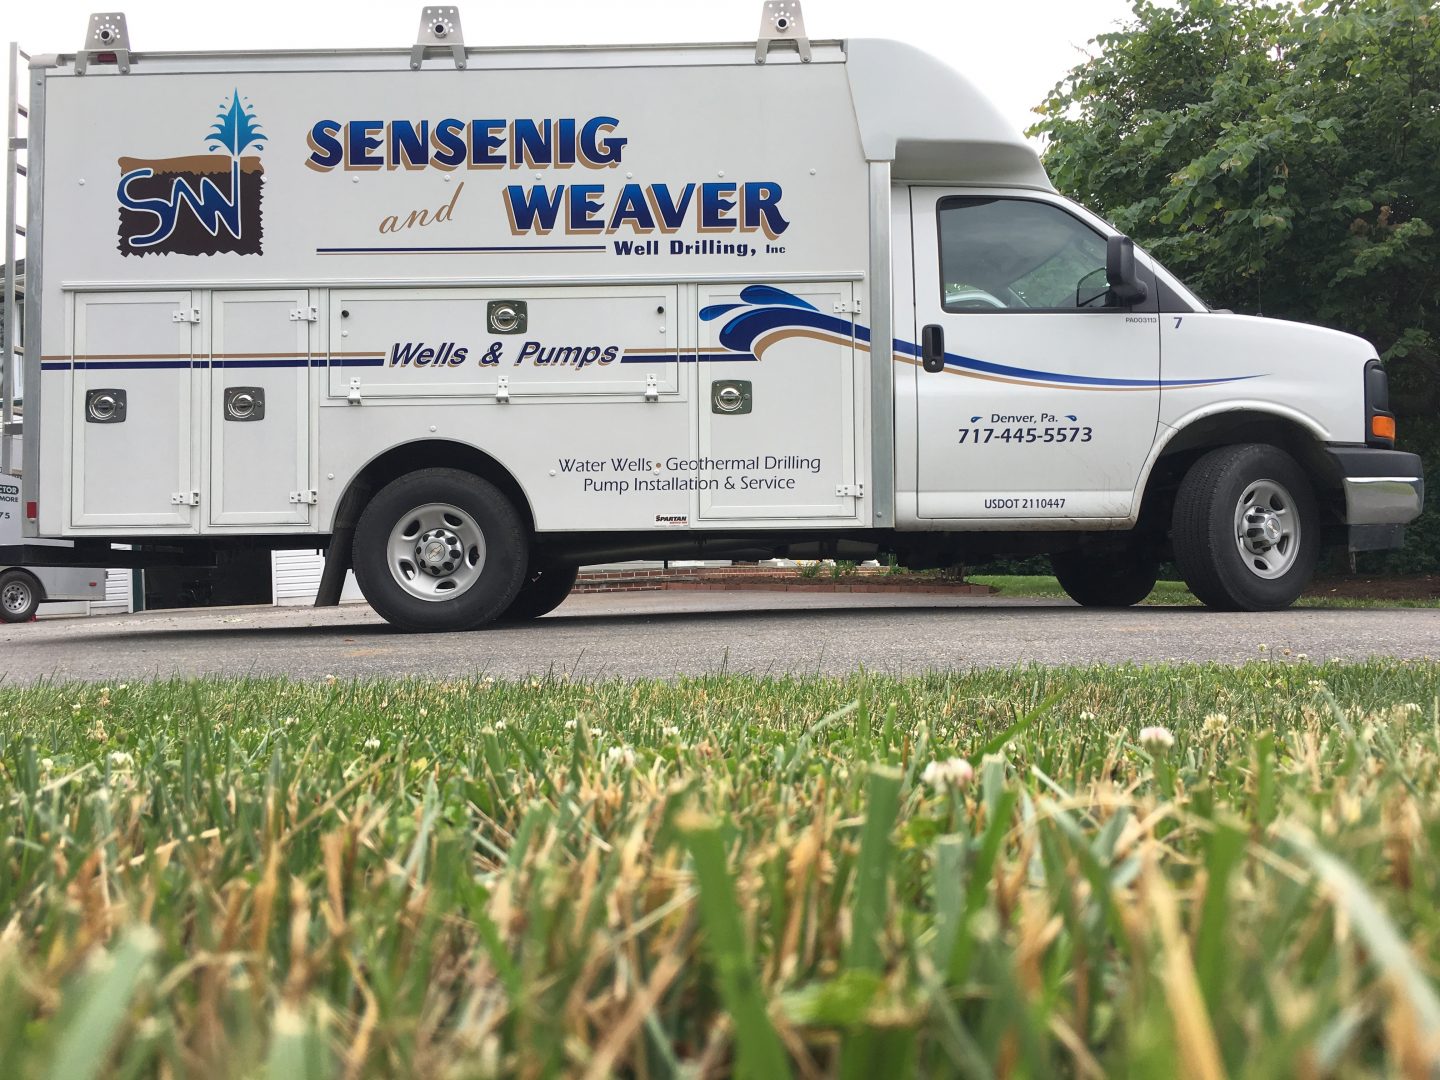 Sensenig and Weaver truck